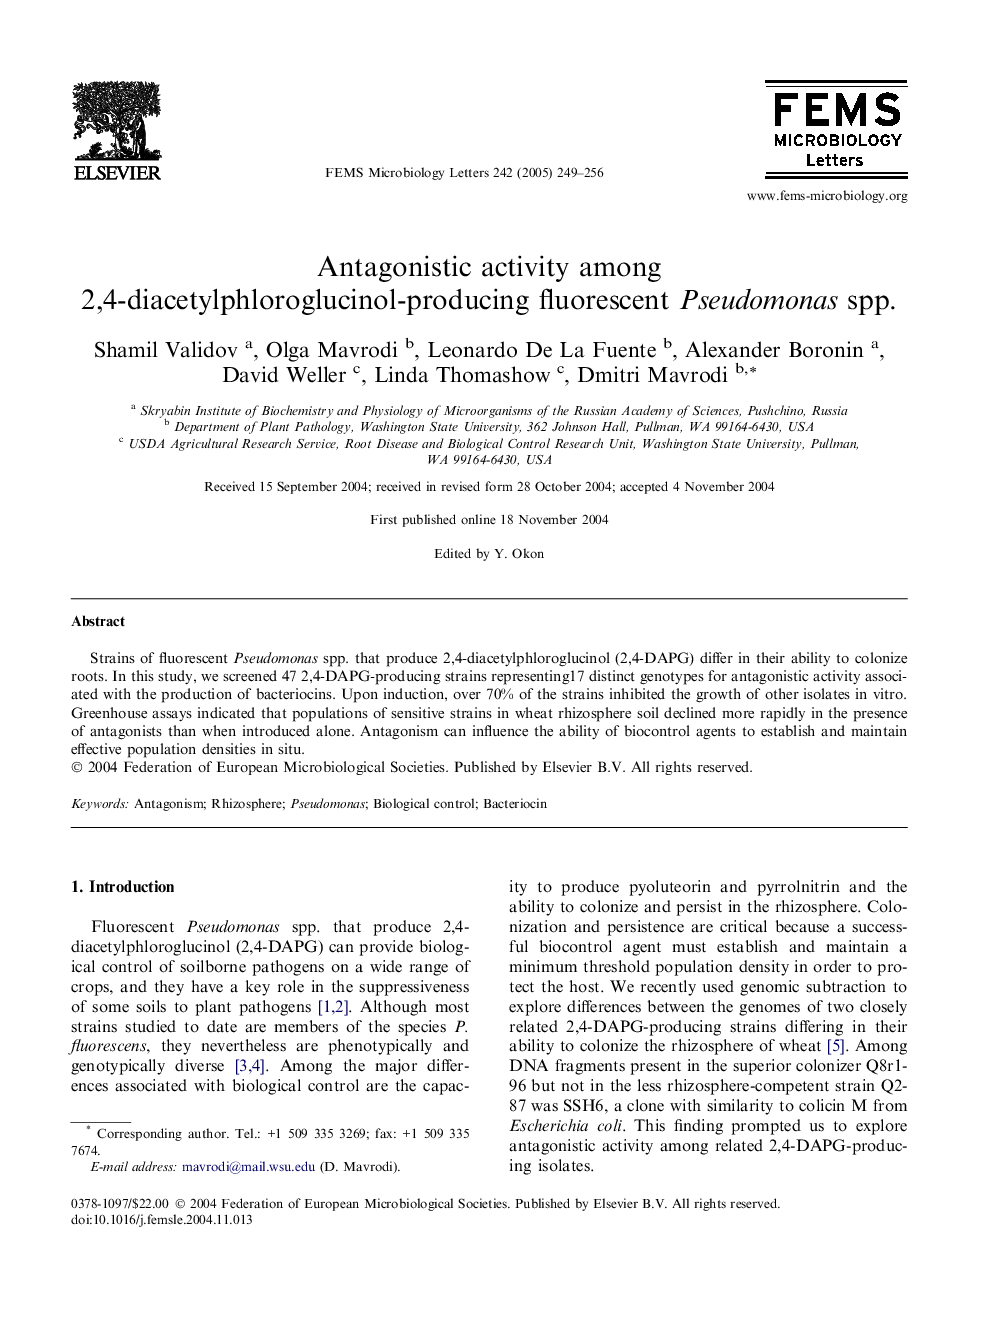 Antagonistic activity among 2,4-diacetylphloroglucinol-producing fluorescent Pseudomonas spp.